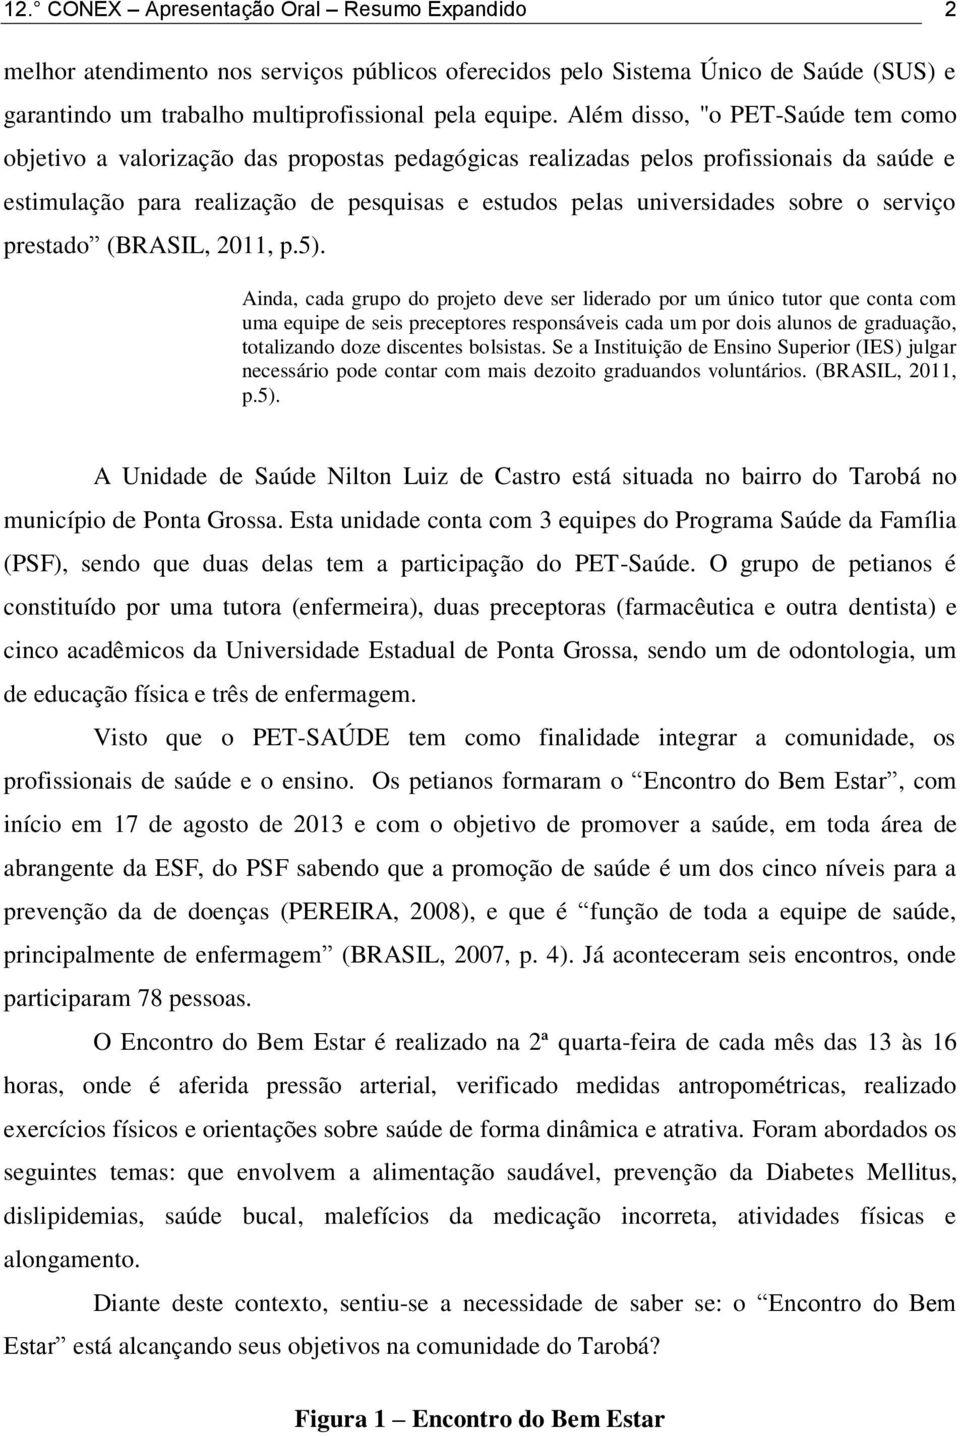 sobre o serviço prestado (BRASIL, 2011, p.5).